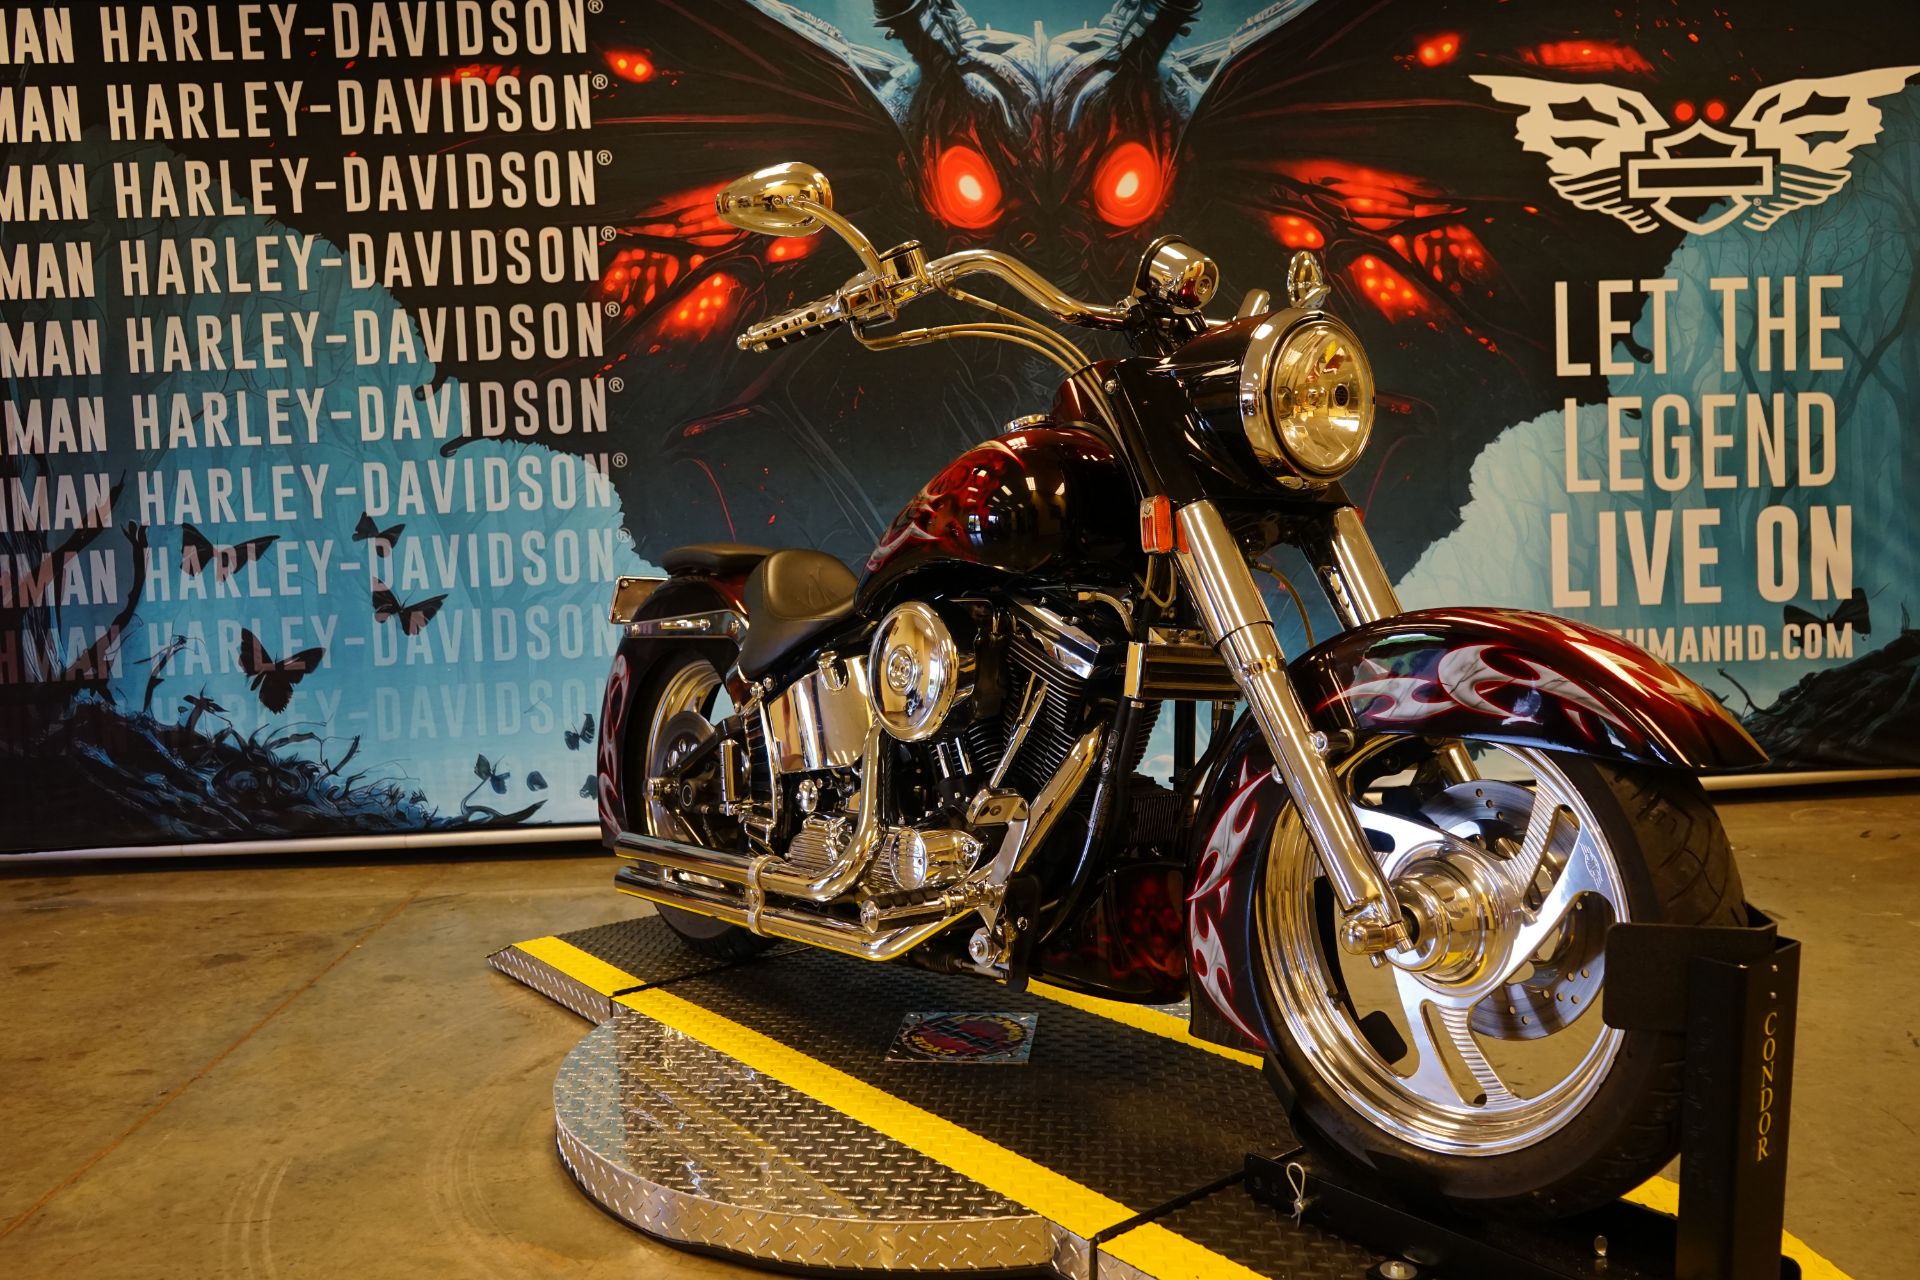 1997 Harley-Davidson CUSTOM in Williamstown, West Virginia - Photo 2